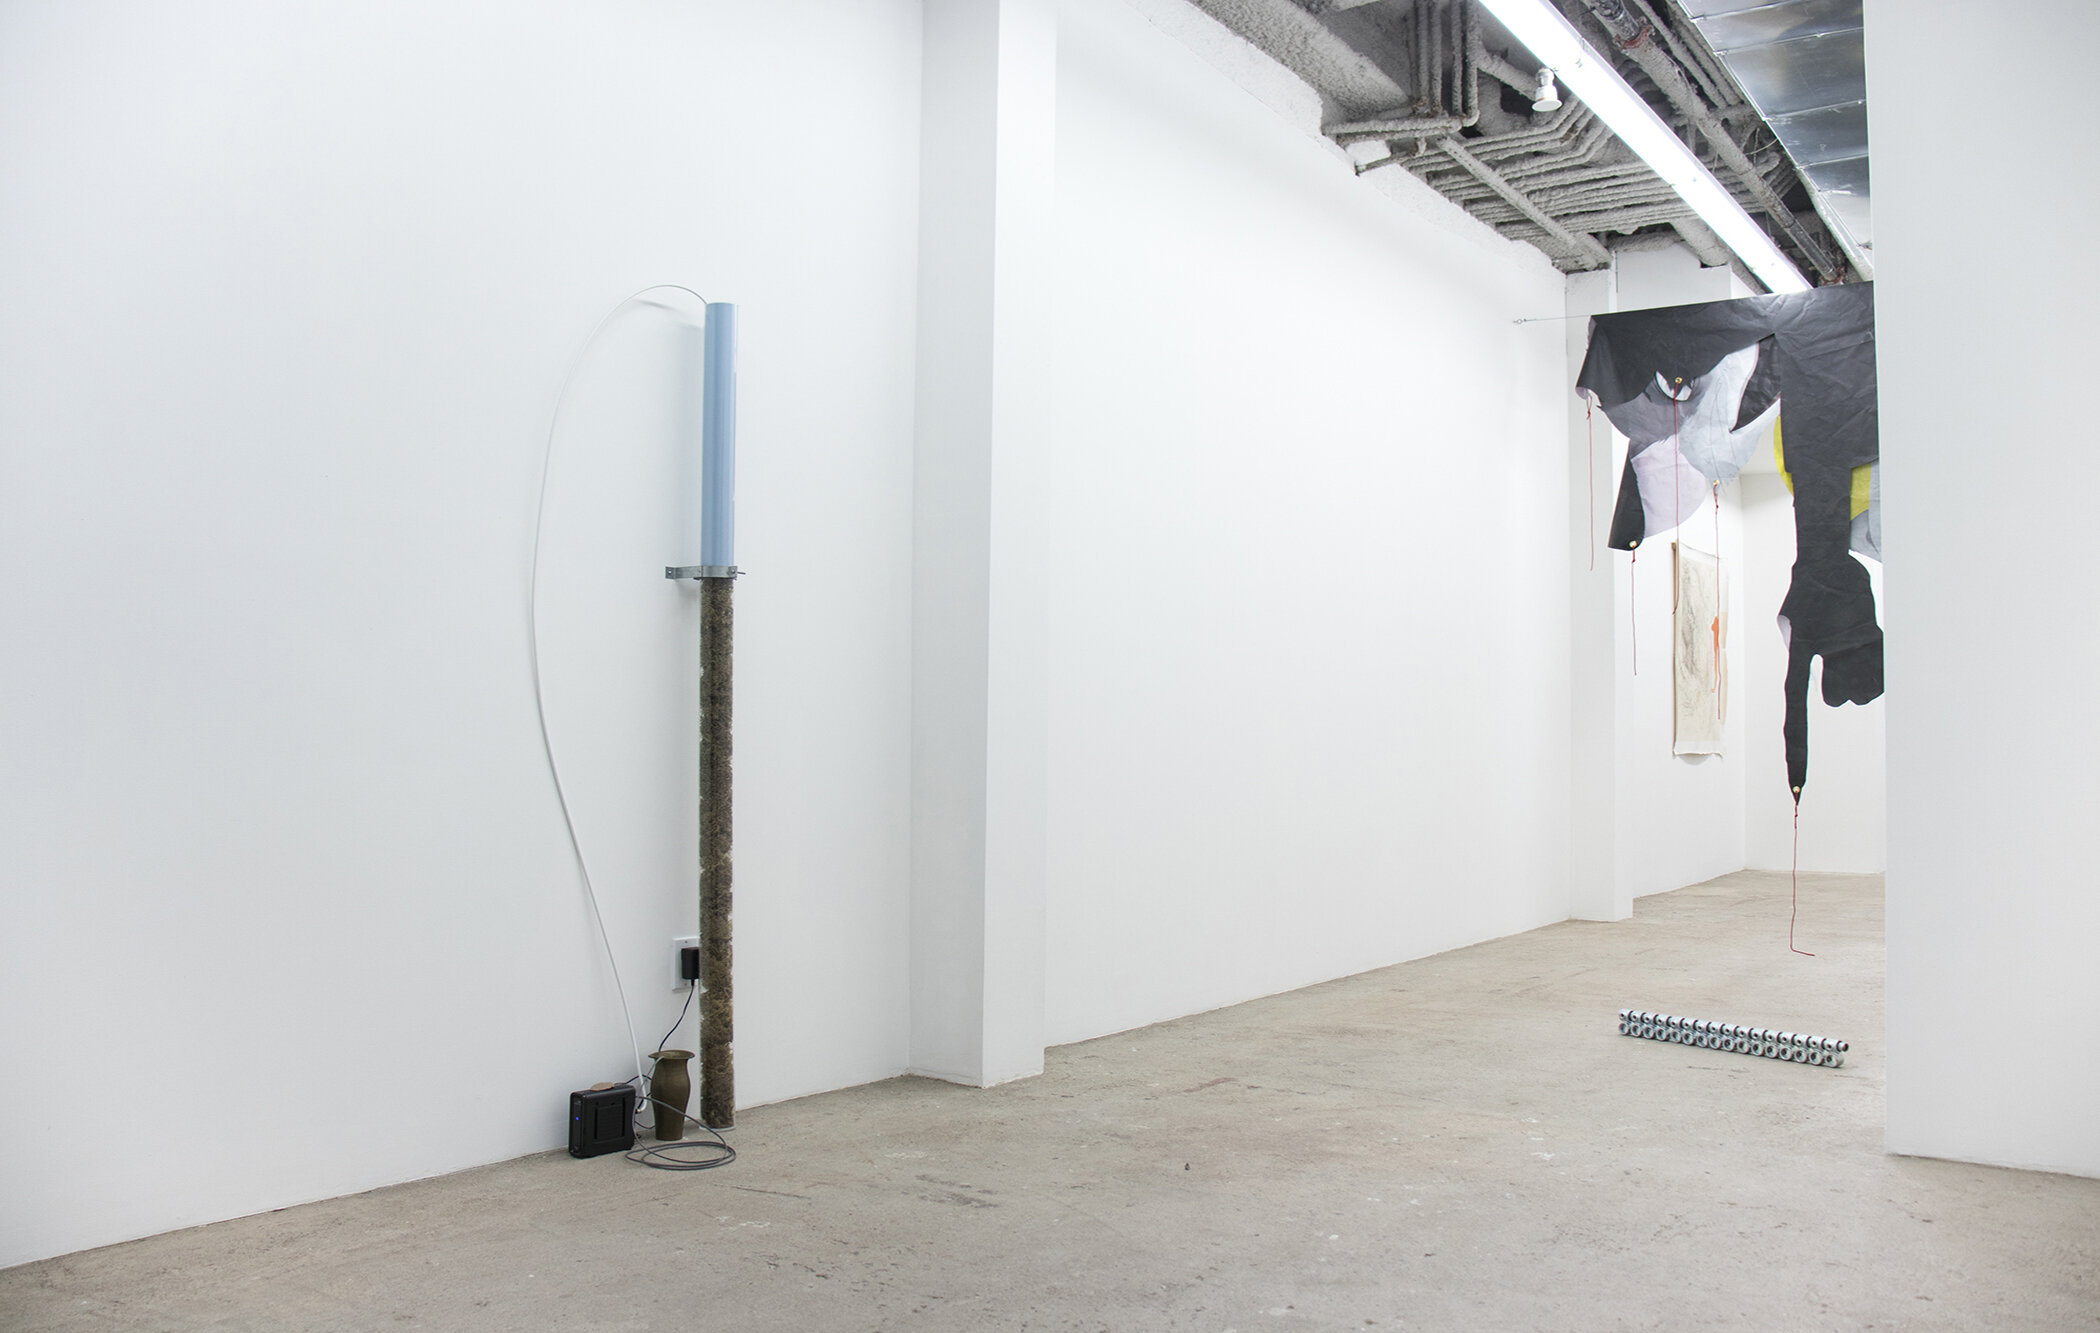   Seven Artists/Seven Works  Installation view, front gallery Connor McNicholas, Jonathan Mildenberg, Vladislav Markov 